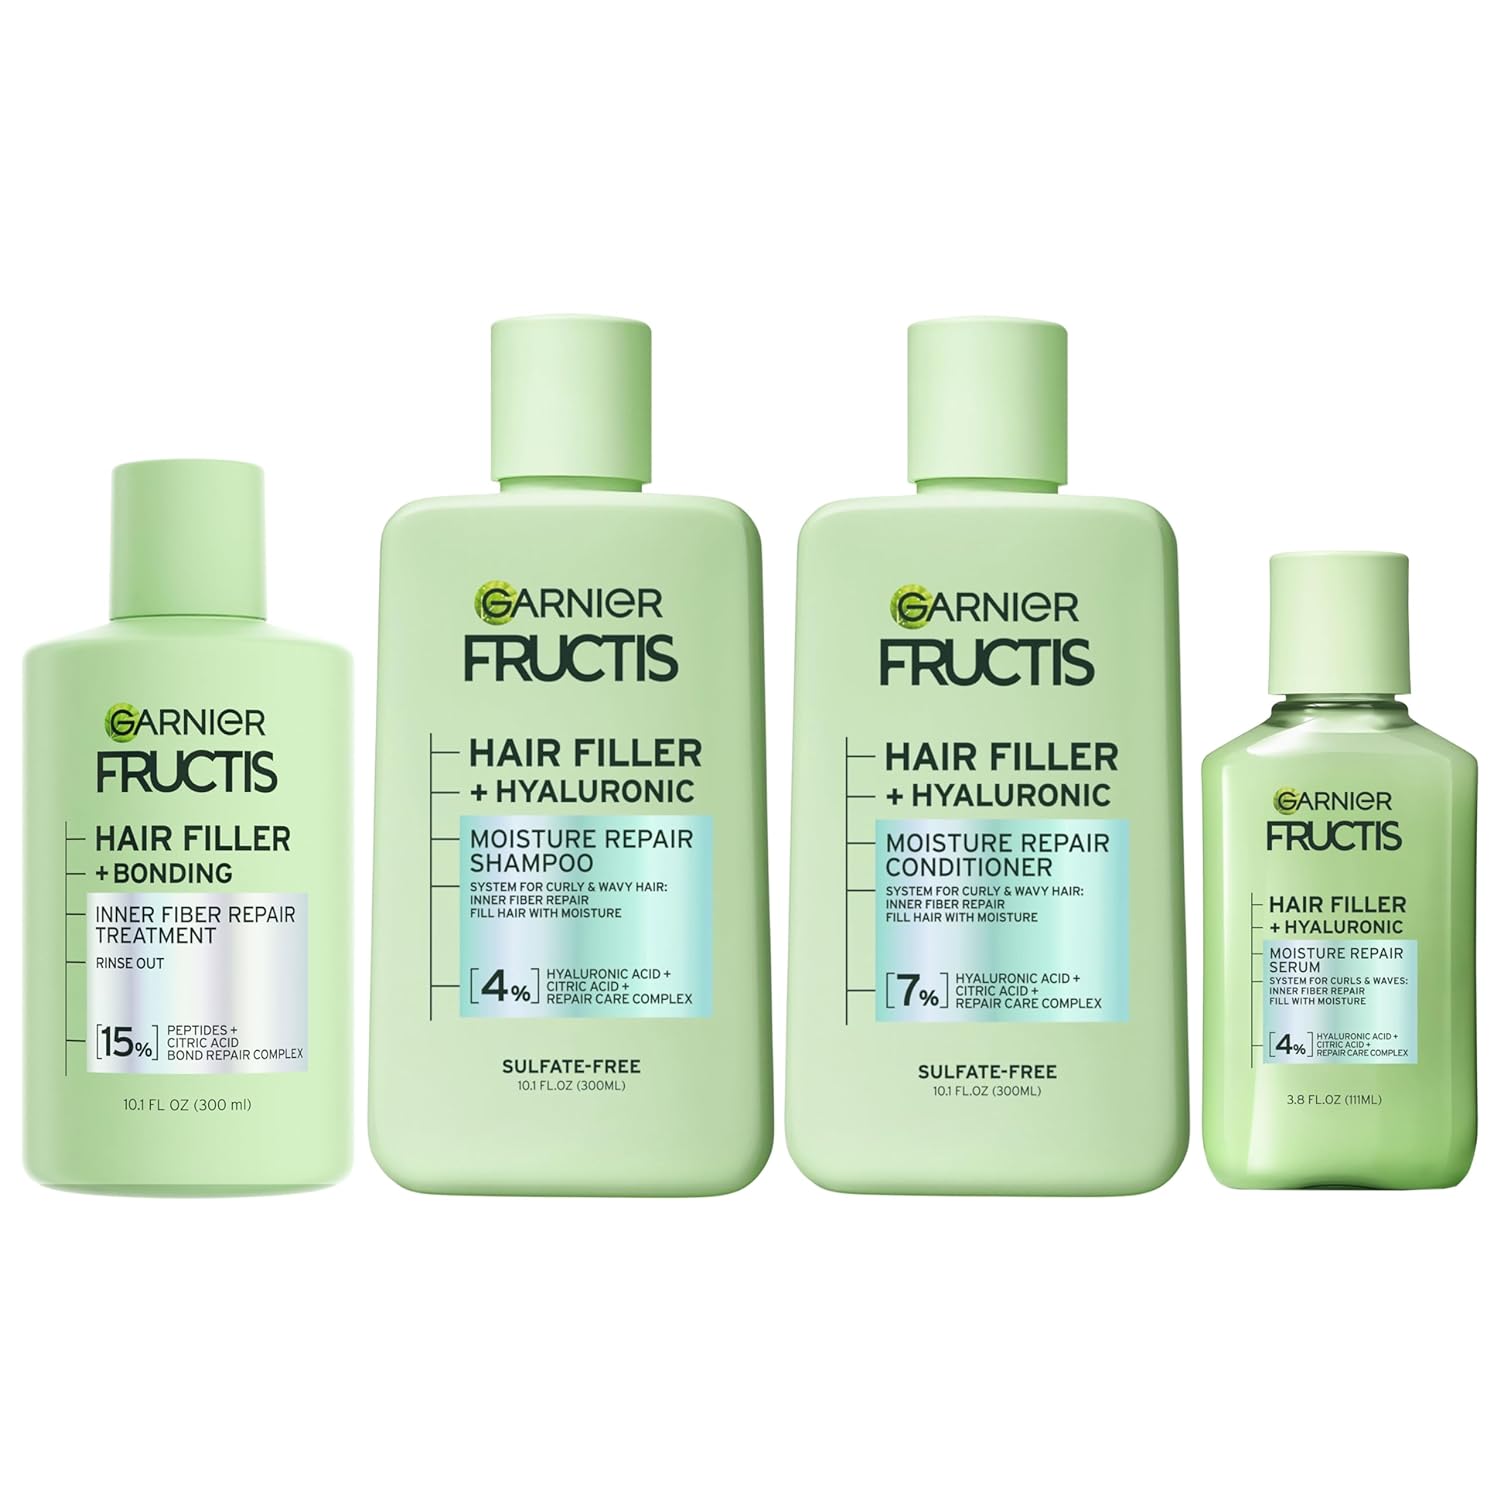 Garnier Fructis Hair Filler Bonding Pre-Shampoo + Moisture Repair Shampoo, Conditioner and Serum Set for Curly, Wavy Hair, with Hyaluronic Acid (4 Items), 1 Kit